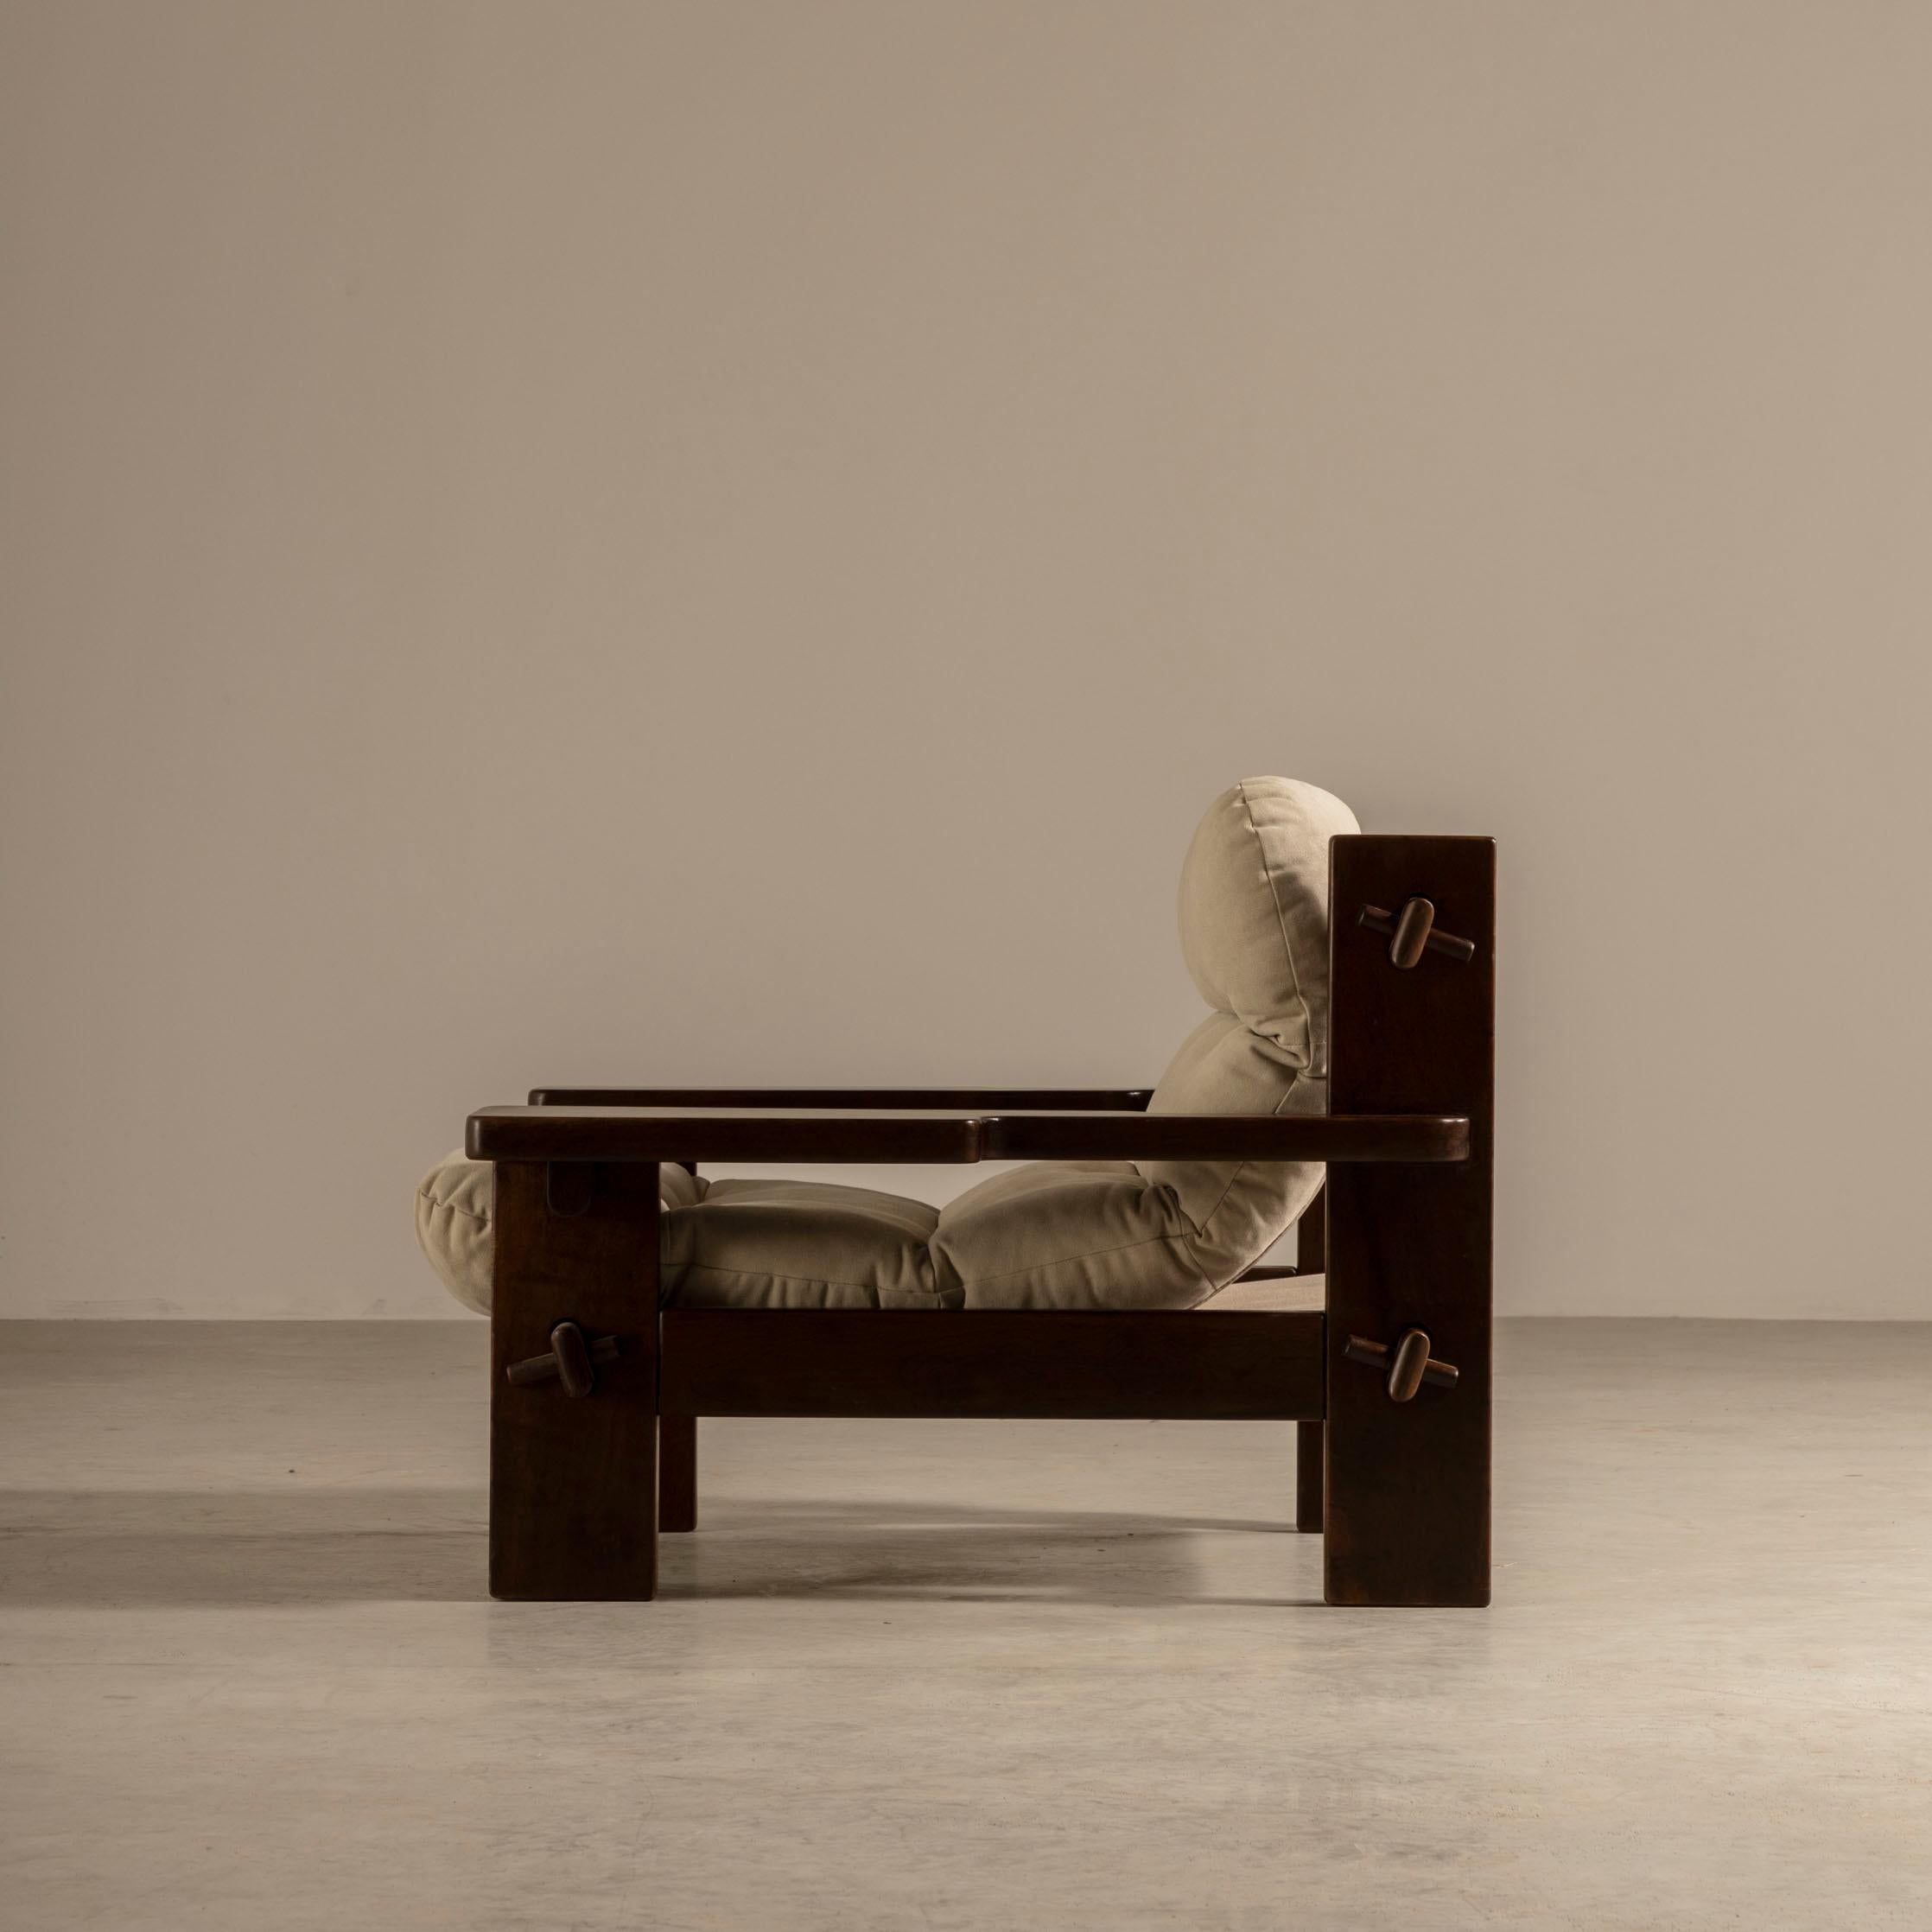 Fabric Lounge Chairs by Jean Gillon in Hardwood, Brazilian Midcentury Modern Design